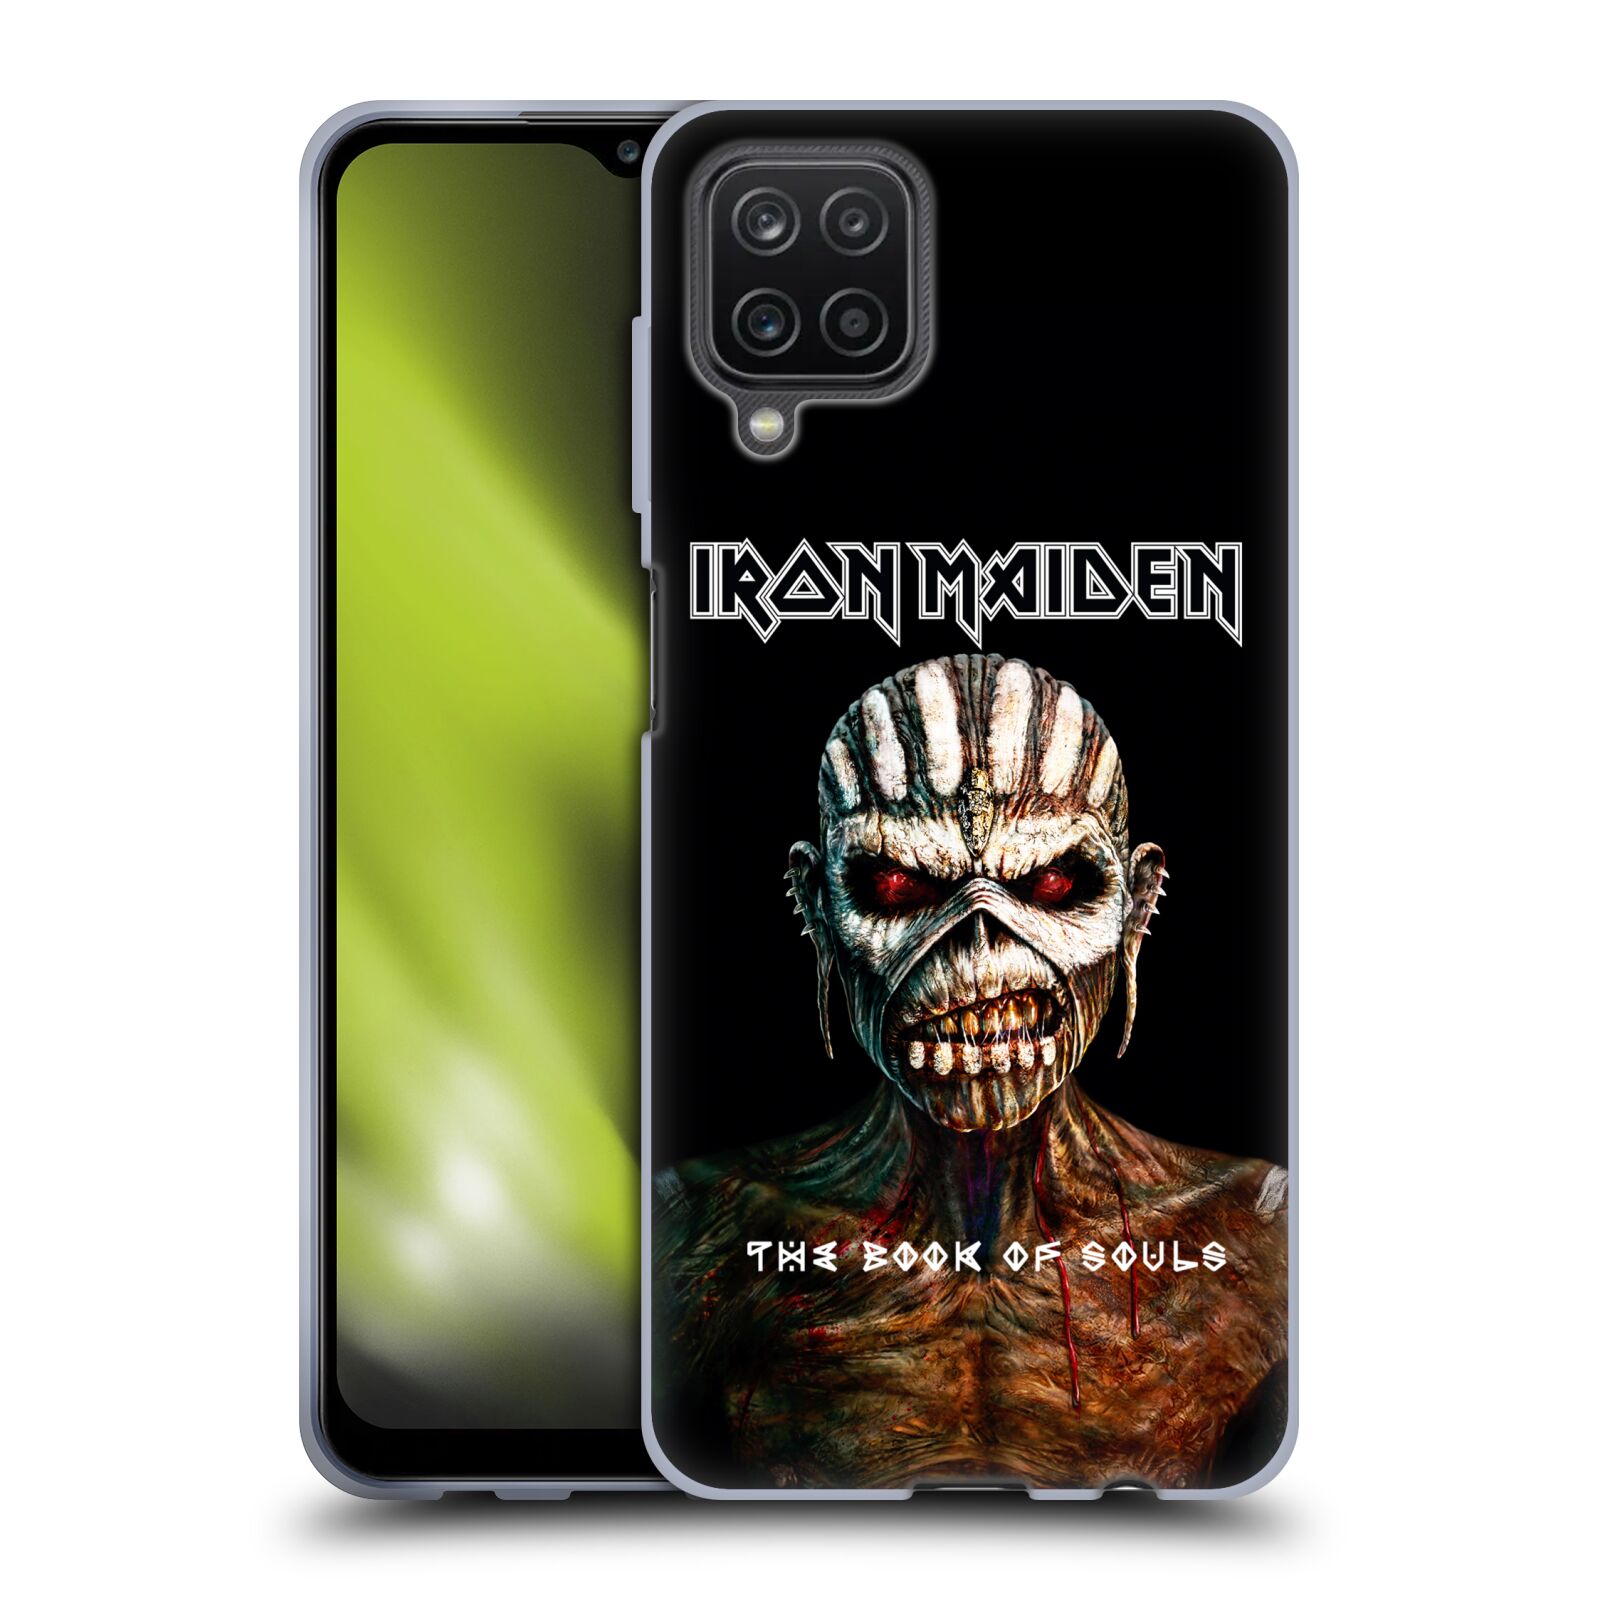 Silikonové pouzdro na mobil Samsung Galaxy A12 - Head Case - Iron Maiden - The Book Of Souls (Silikonový kryt, obal, pouzdro na mobilní telefon Samsung Galaxy A12 s motivem Iron Maiden - The Book Of Souls)